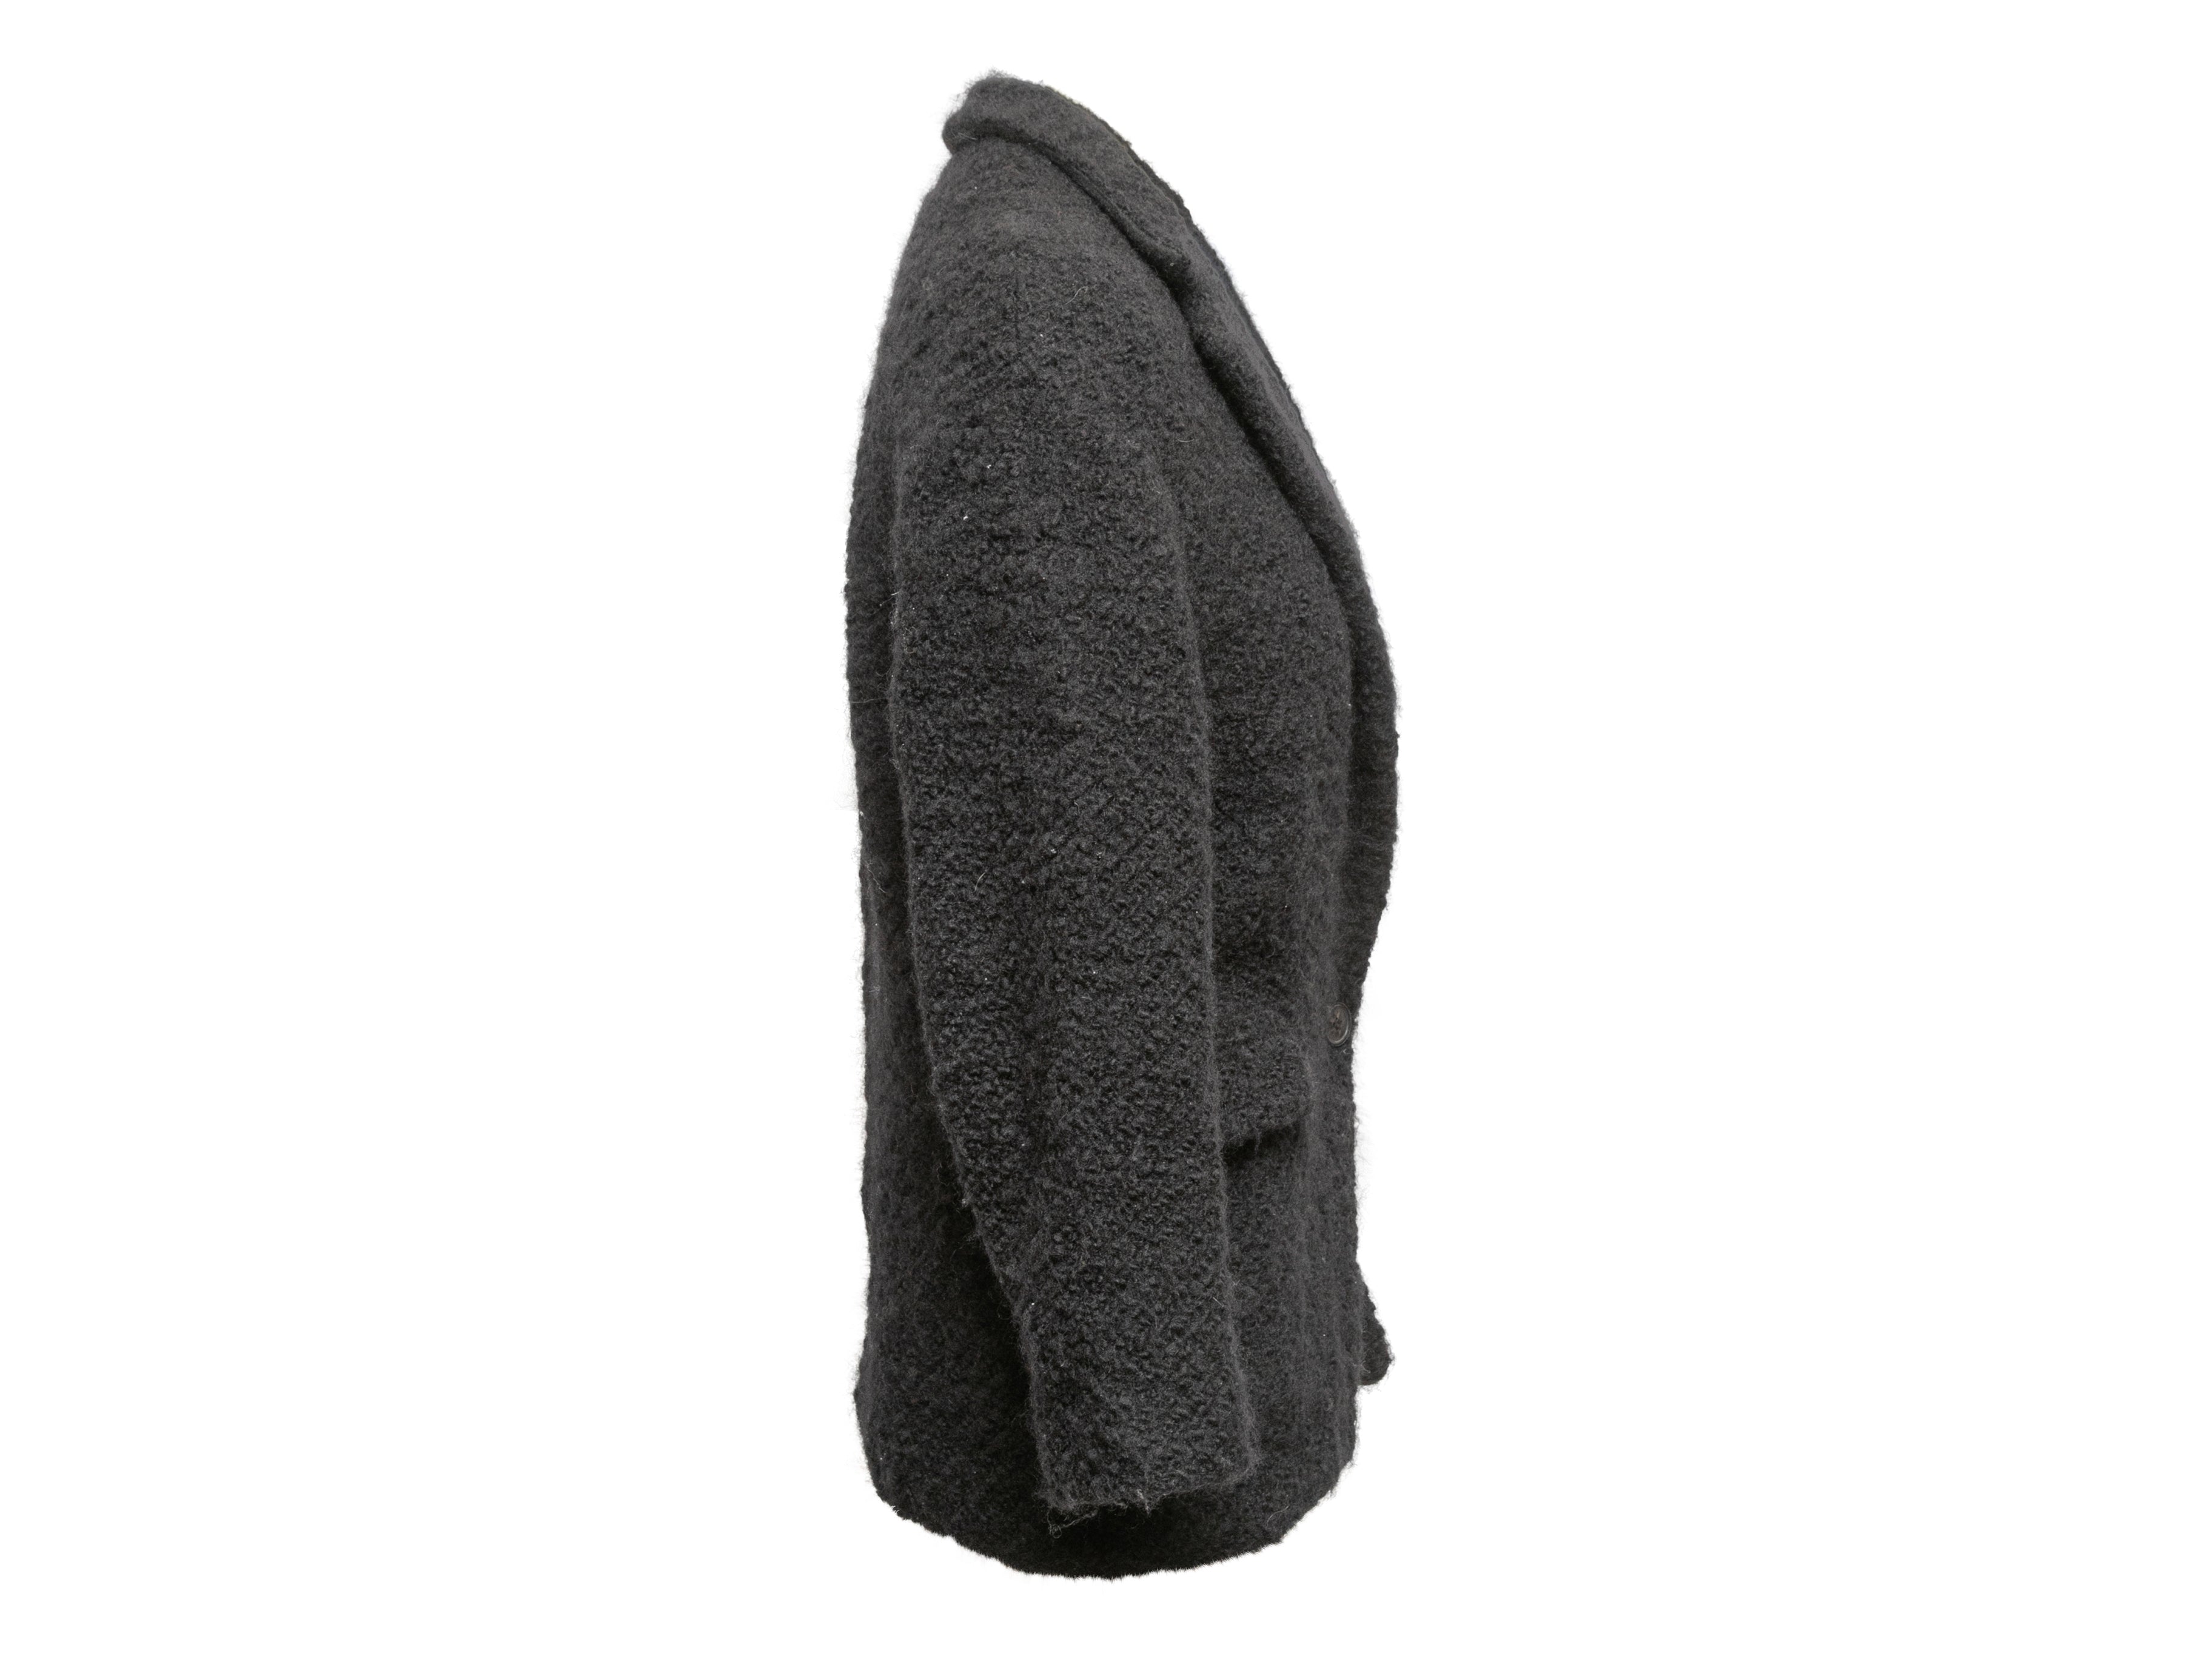 Black Boucle Wool Blazer Size FR 38